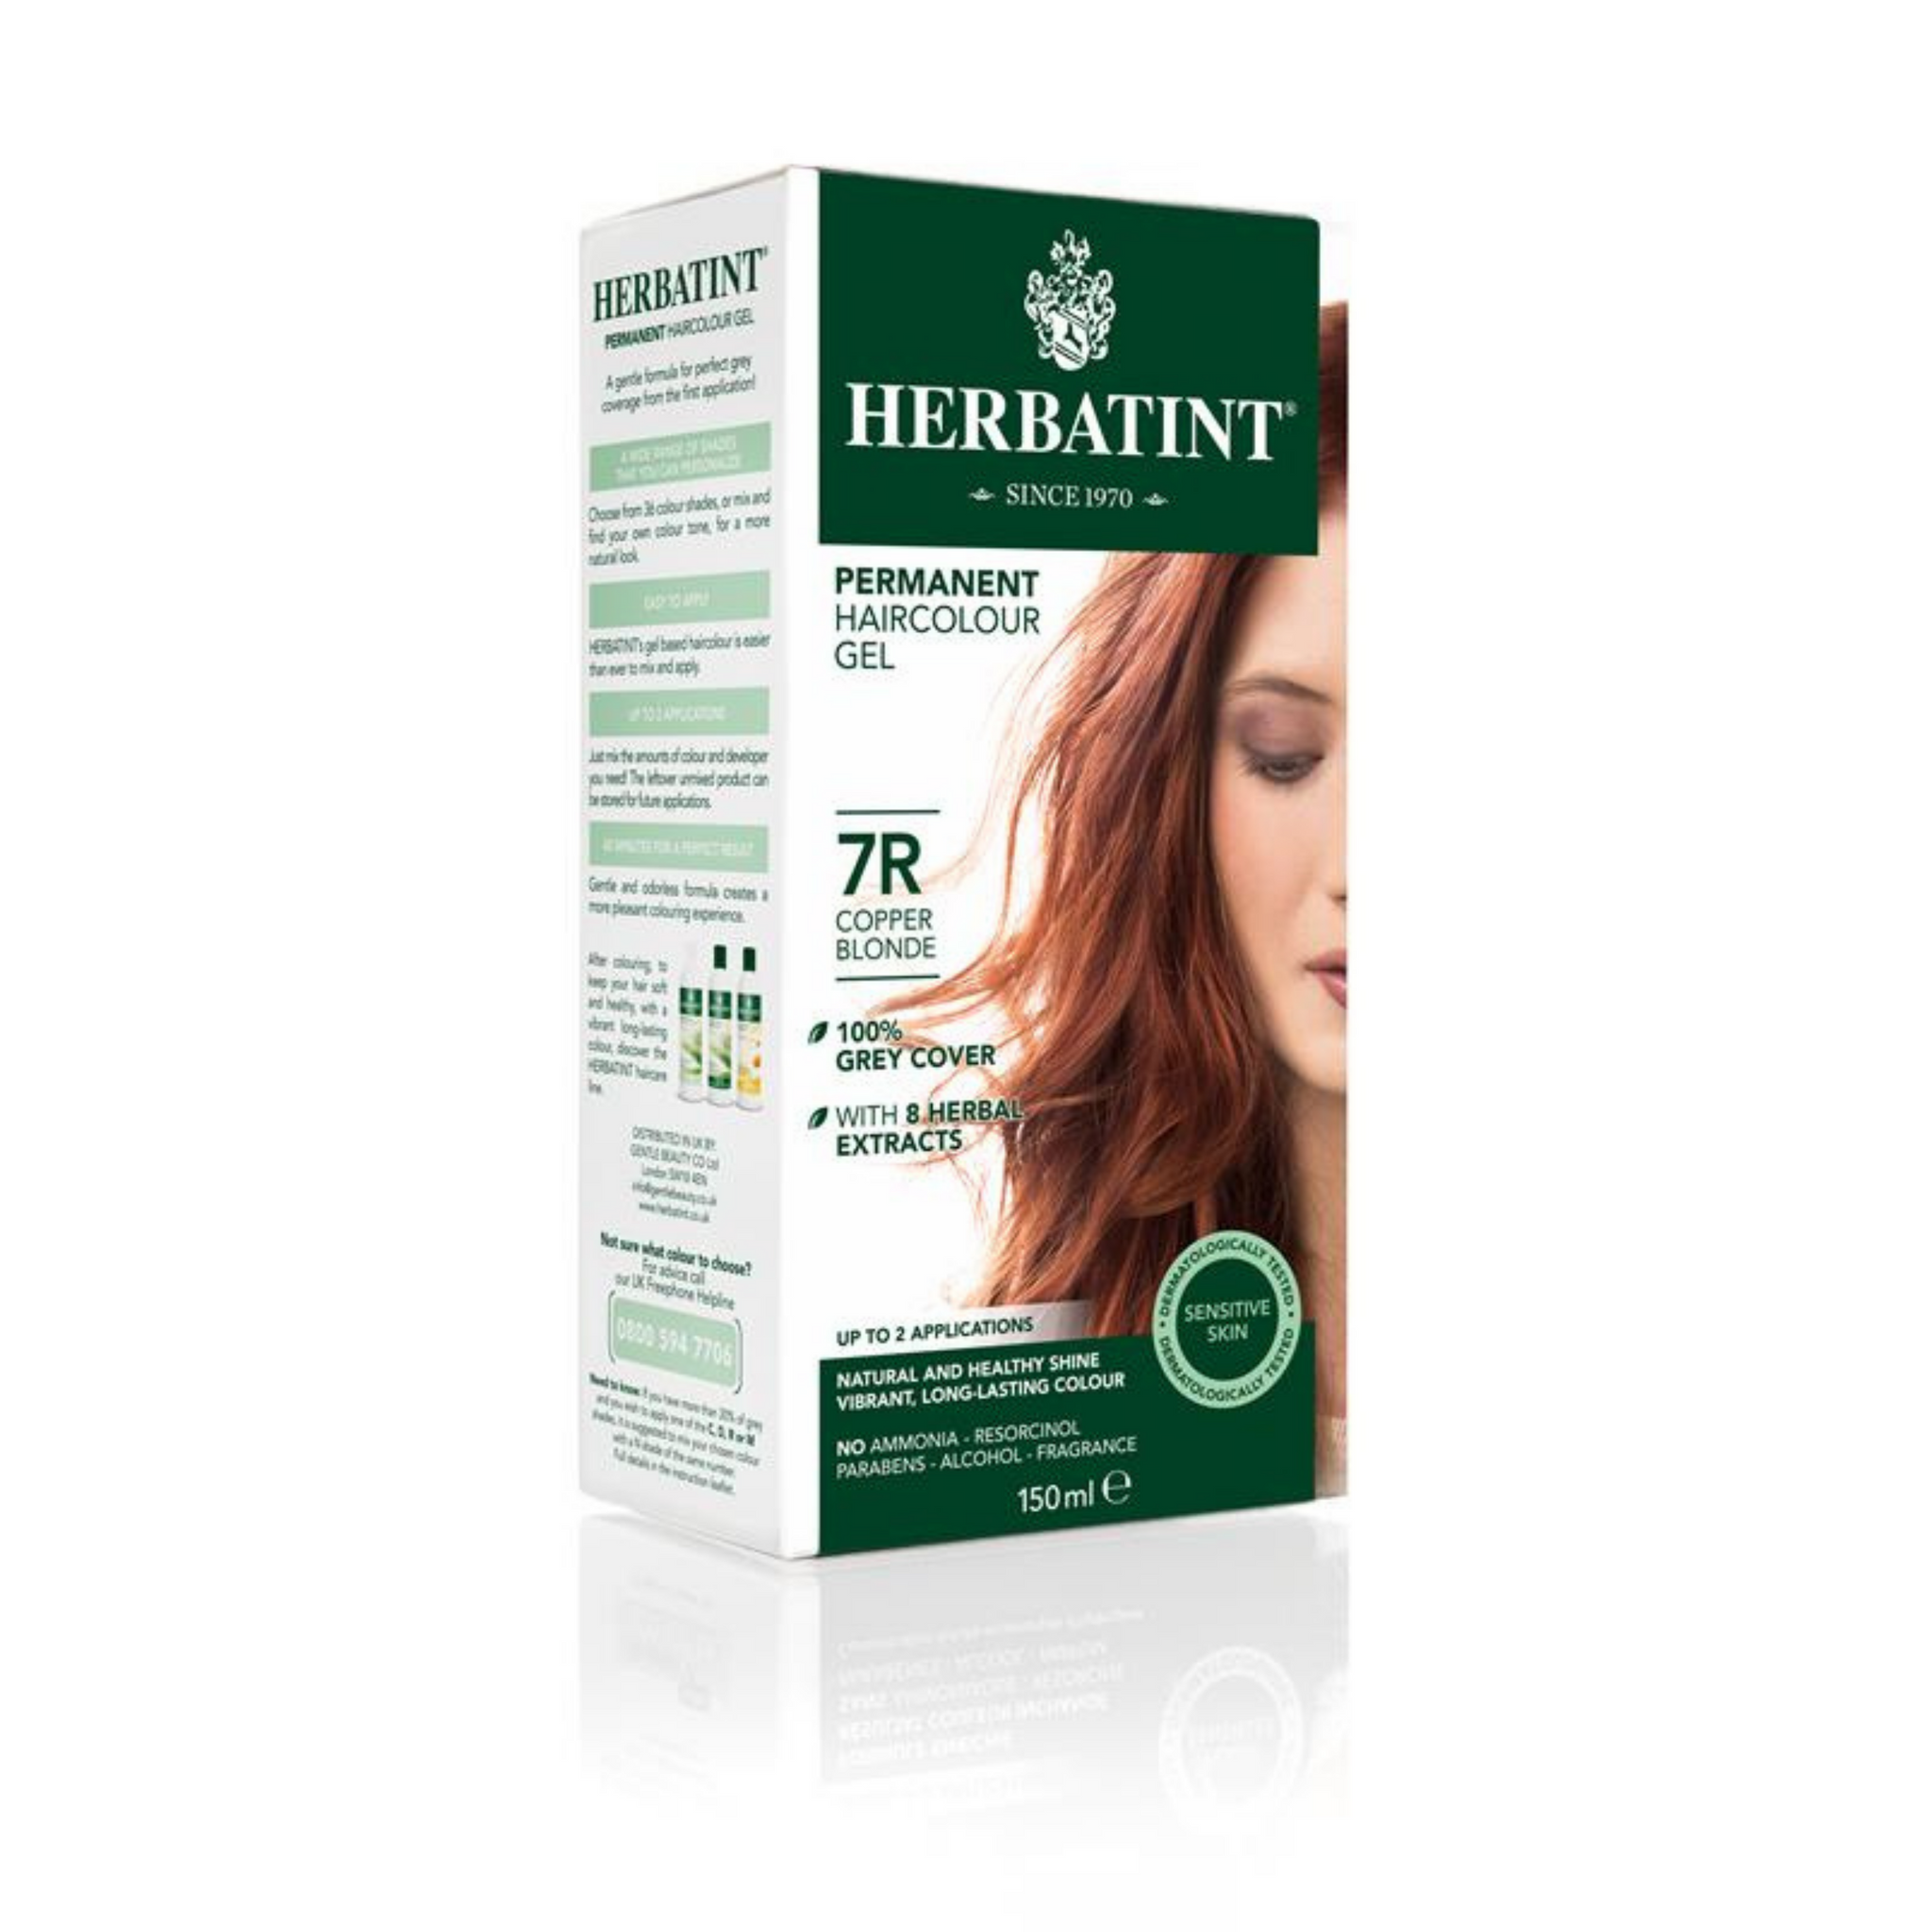 6 x Herbatint Permanent Herbal Hair Colour Gel - 7R Copper Blonde Bundle